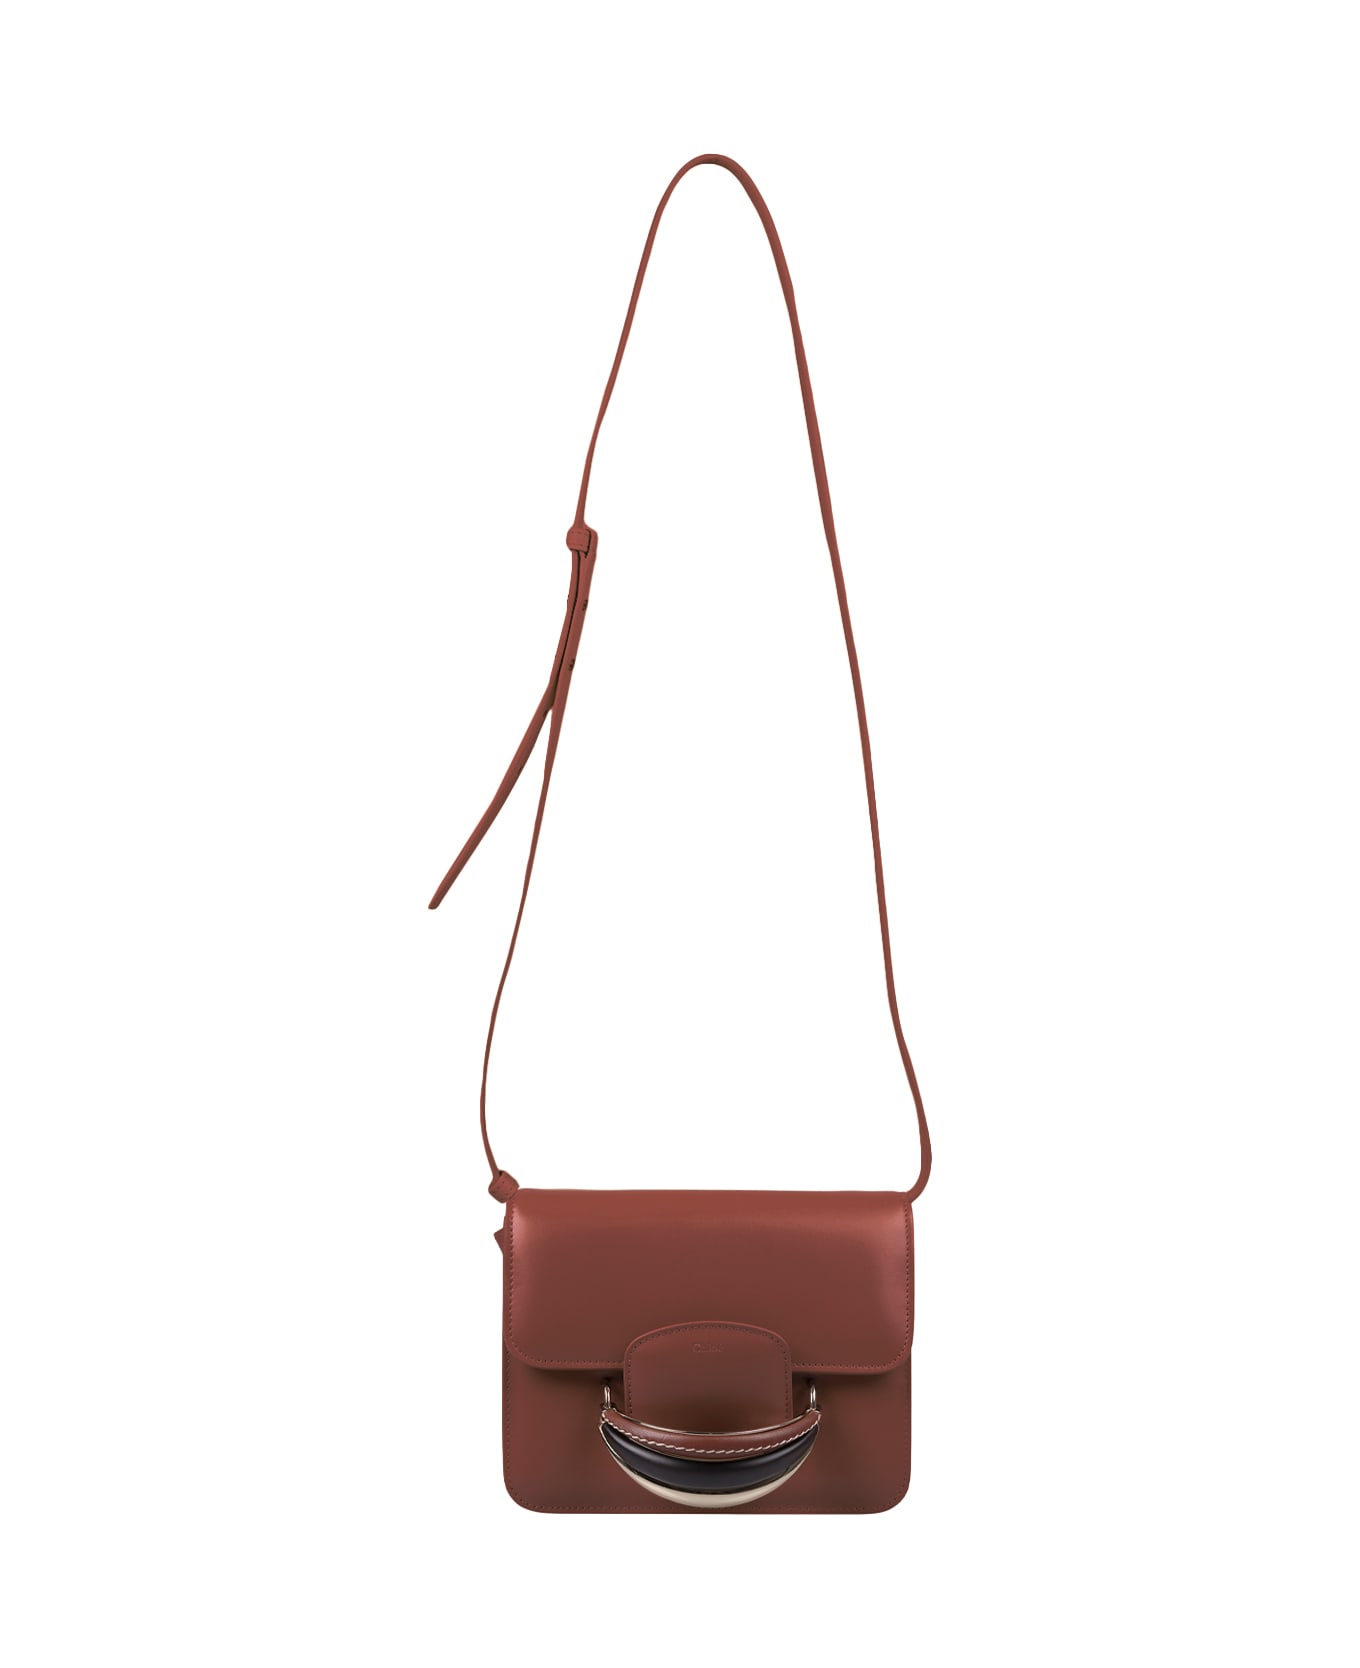 Chloé Kattie Shoulder Bag In Brown Shiny Leather - Sepia brown